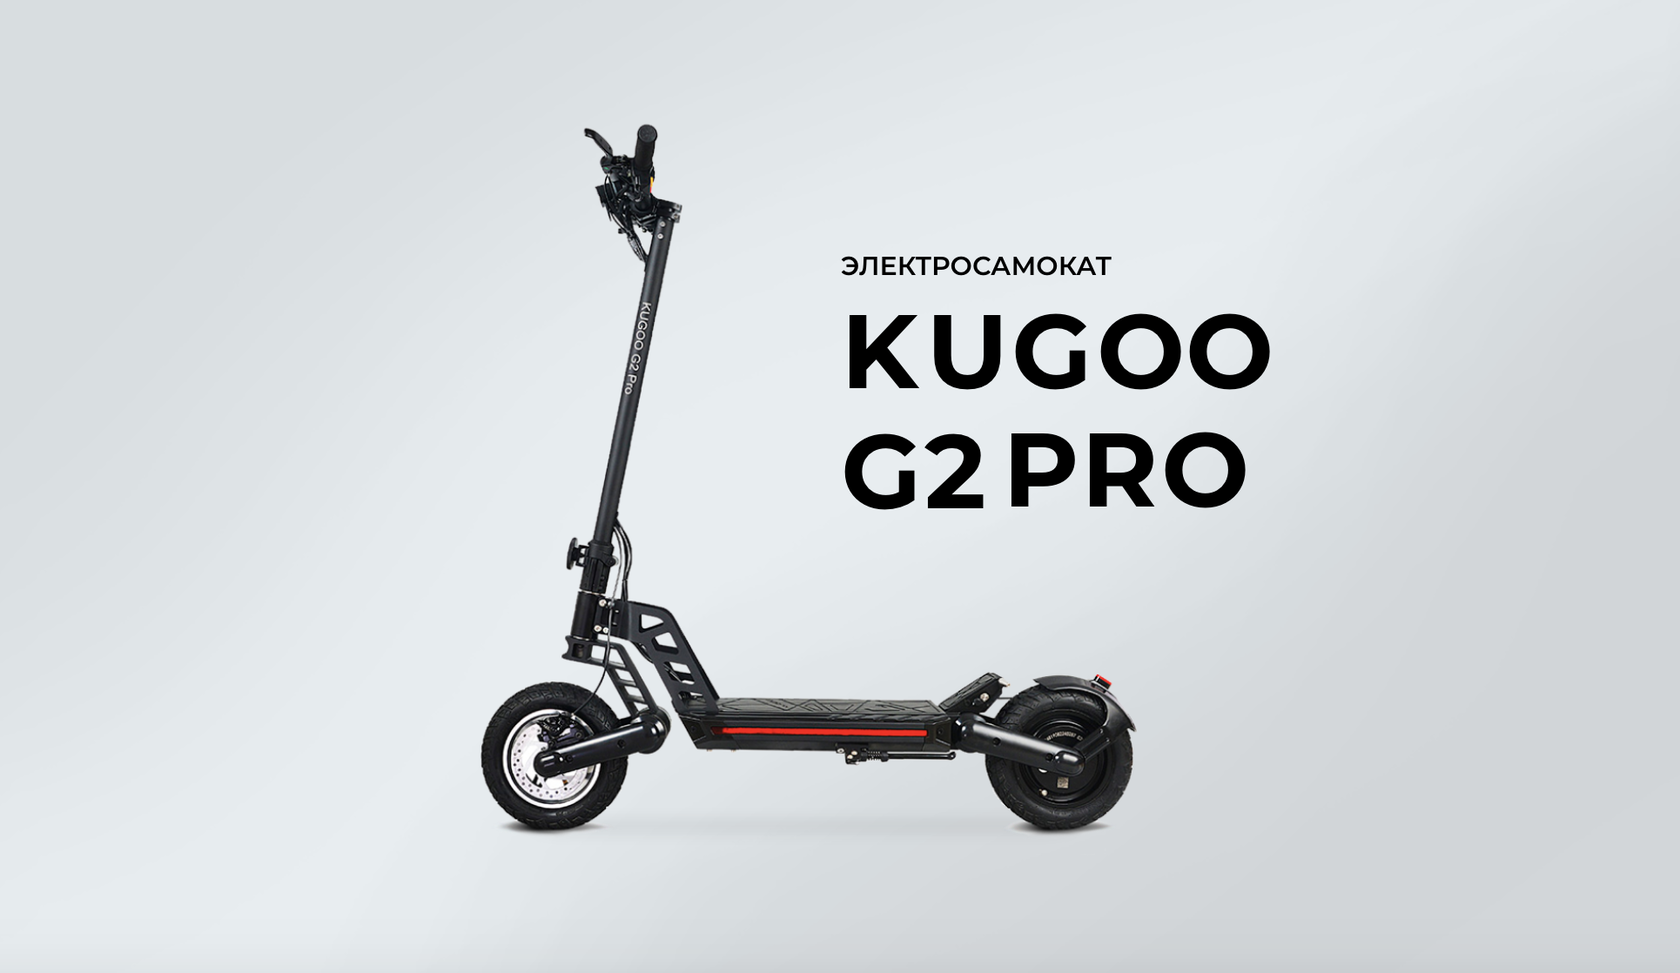 Электросамокат Kugoo g2. Электросамокат Kugoo g3 Pro. Электросамокат Kugoo c2 Pro. Электросамокат Kugoo g2-Pro черный. Kugoo g2 pro купить